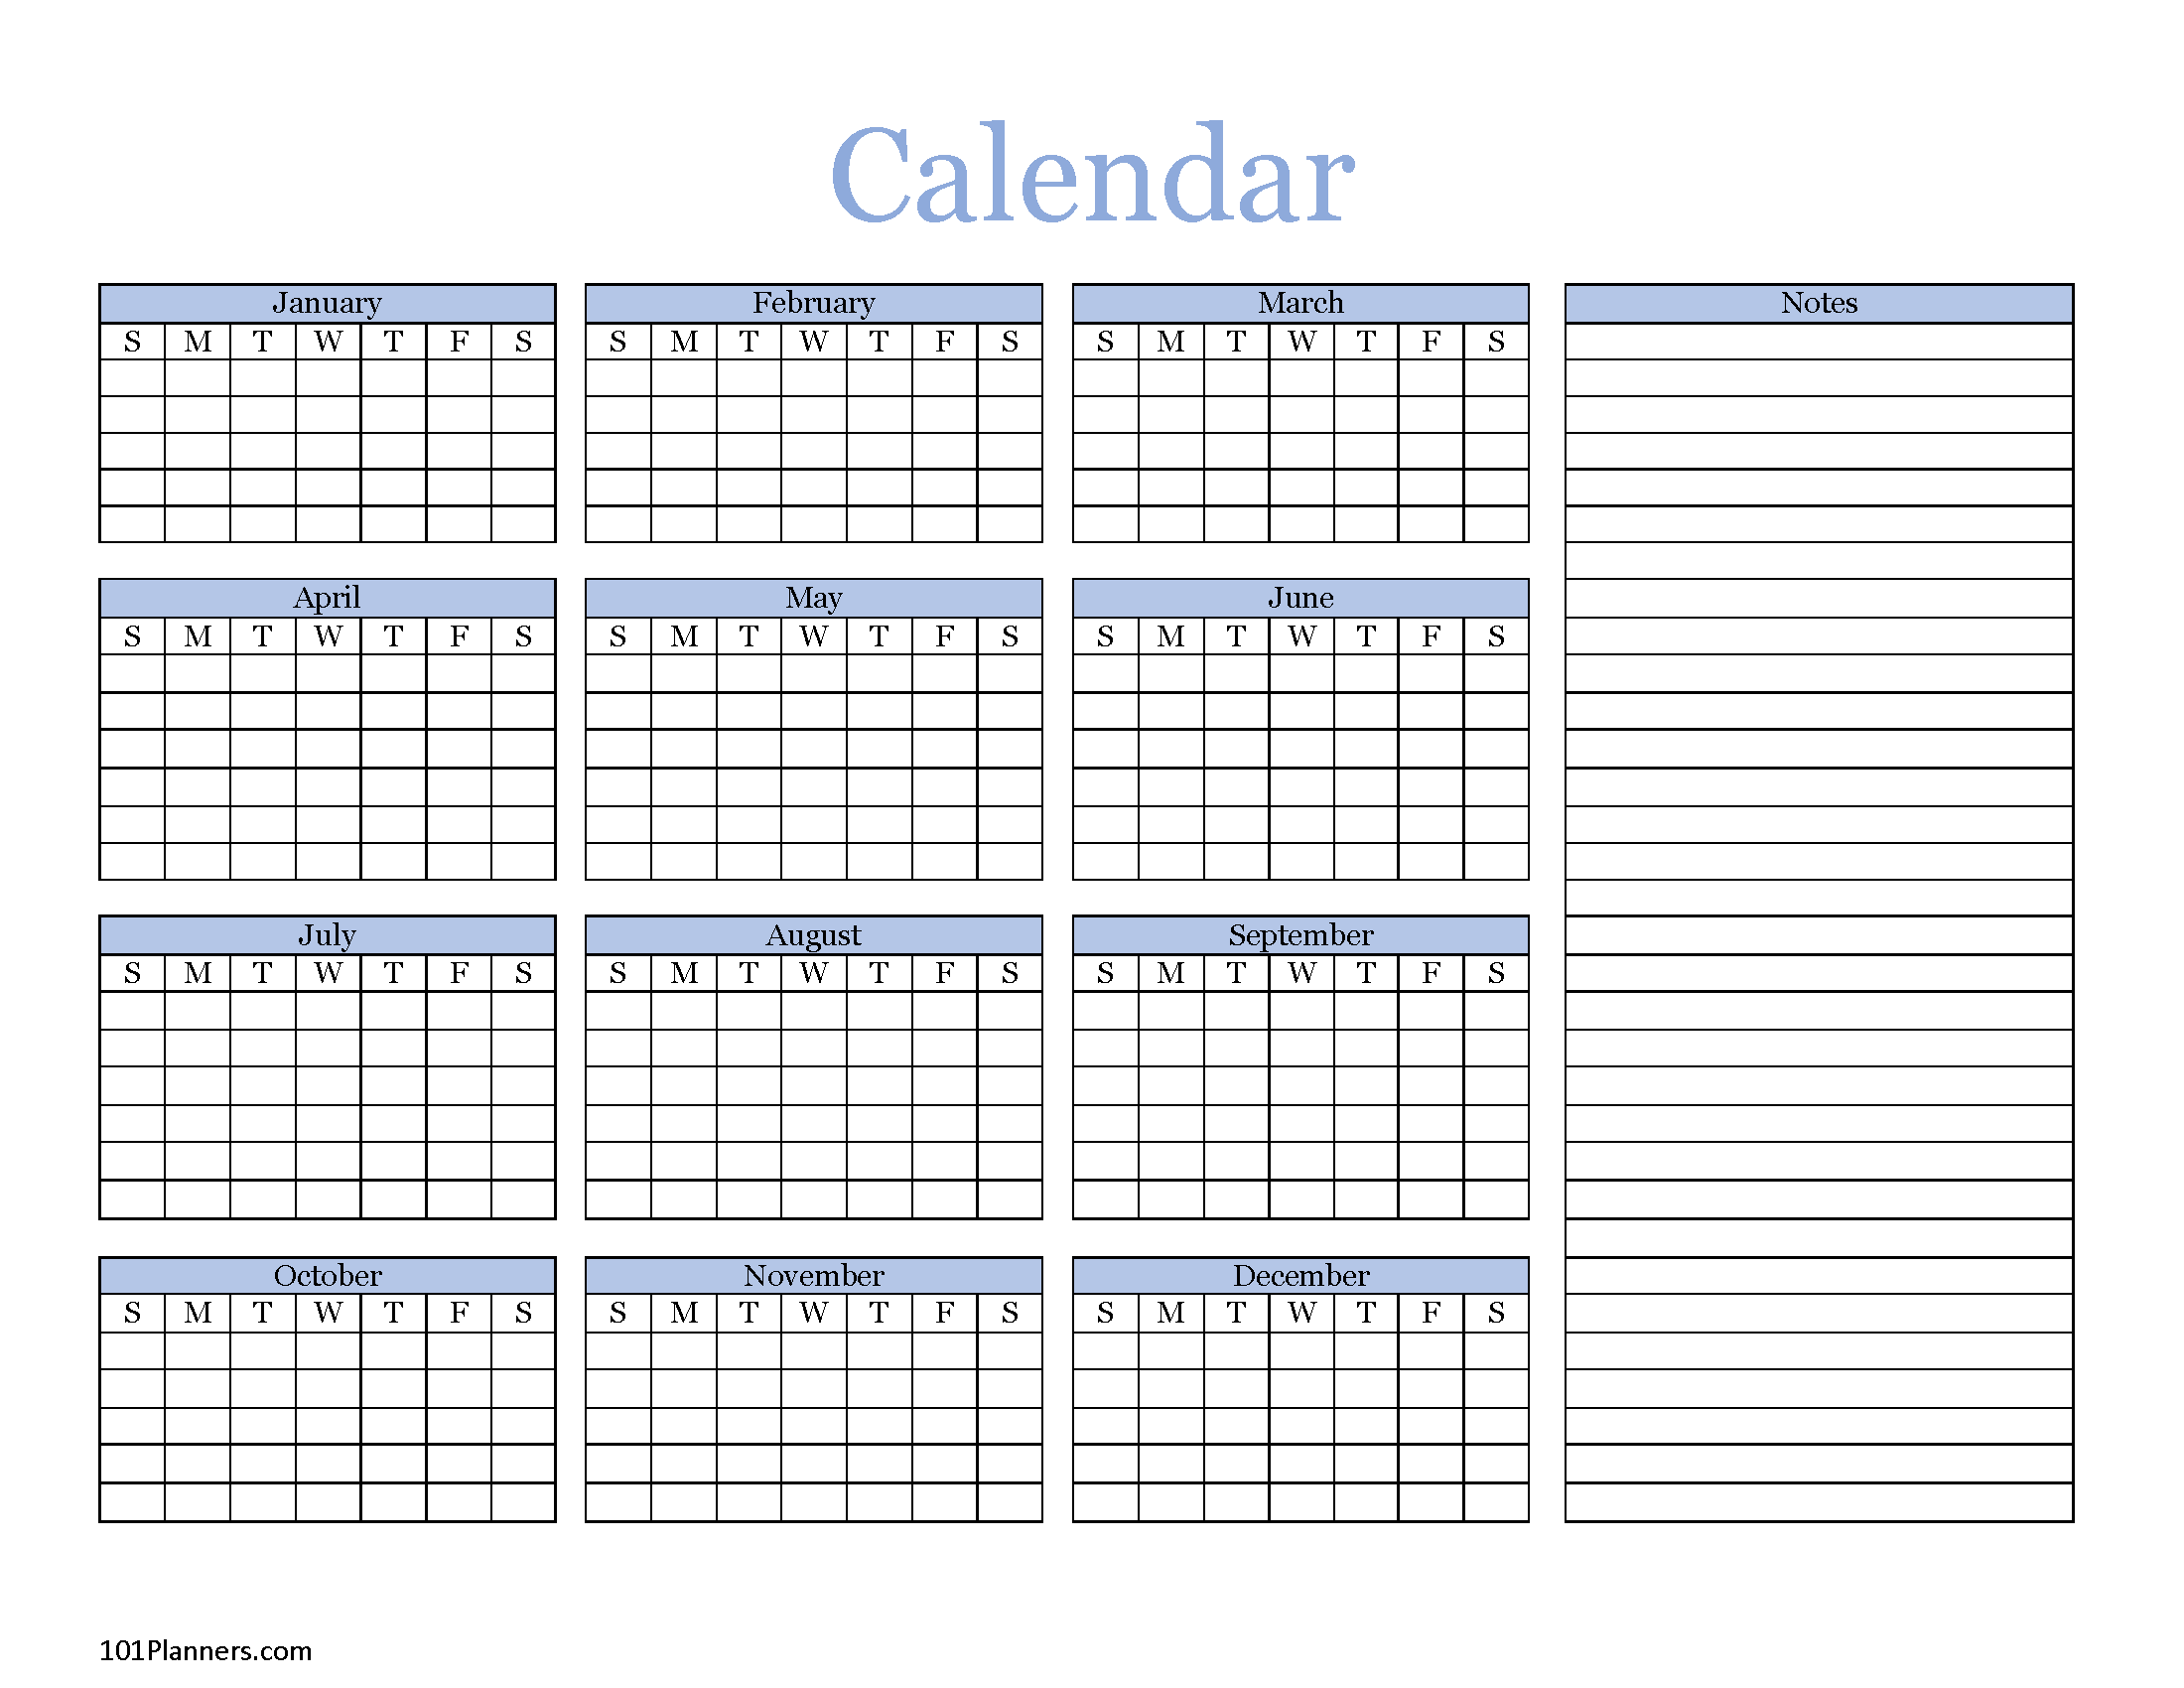 blank-calendar-template-word-calendar-for-planning-yearly-blank-calendar-microsoft-word